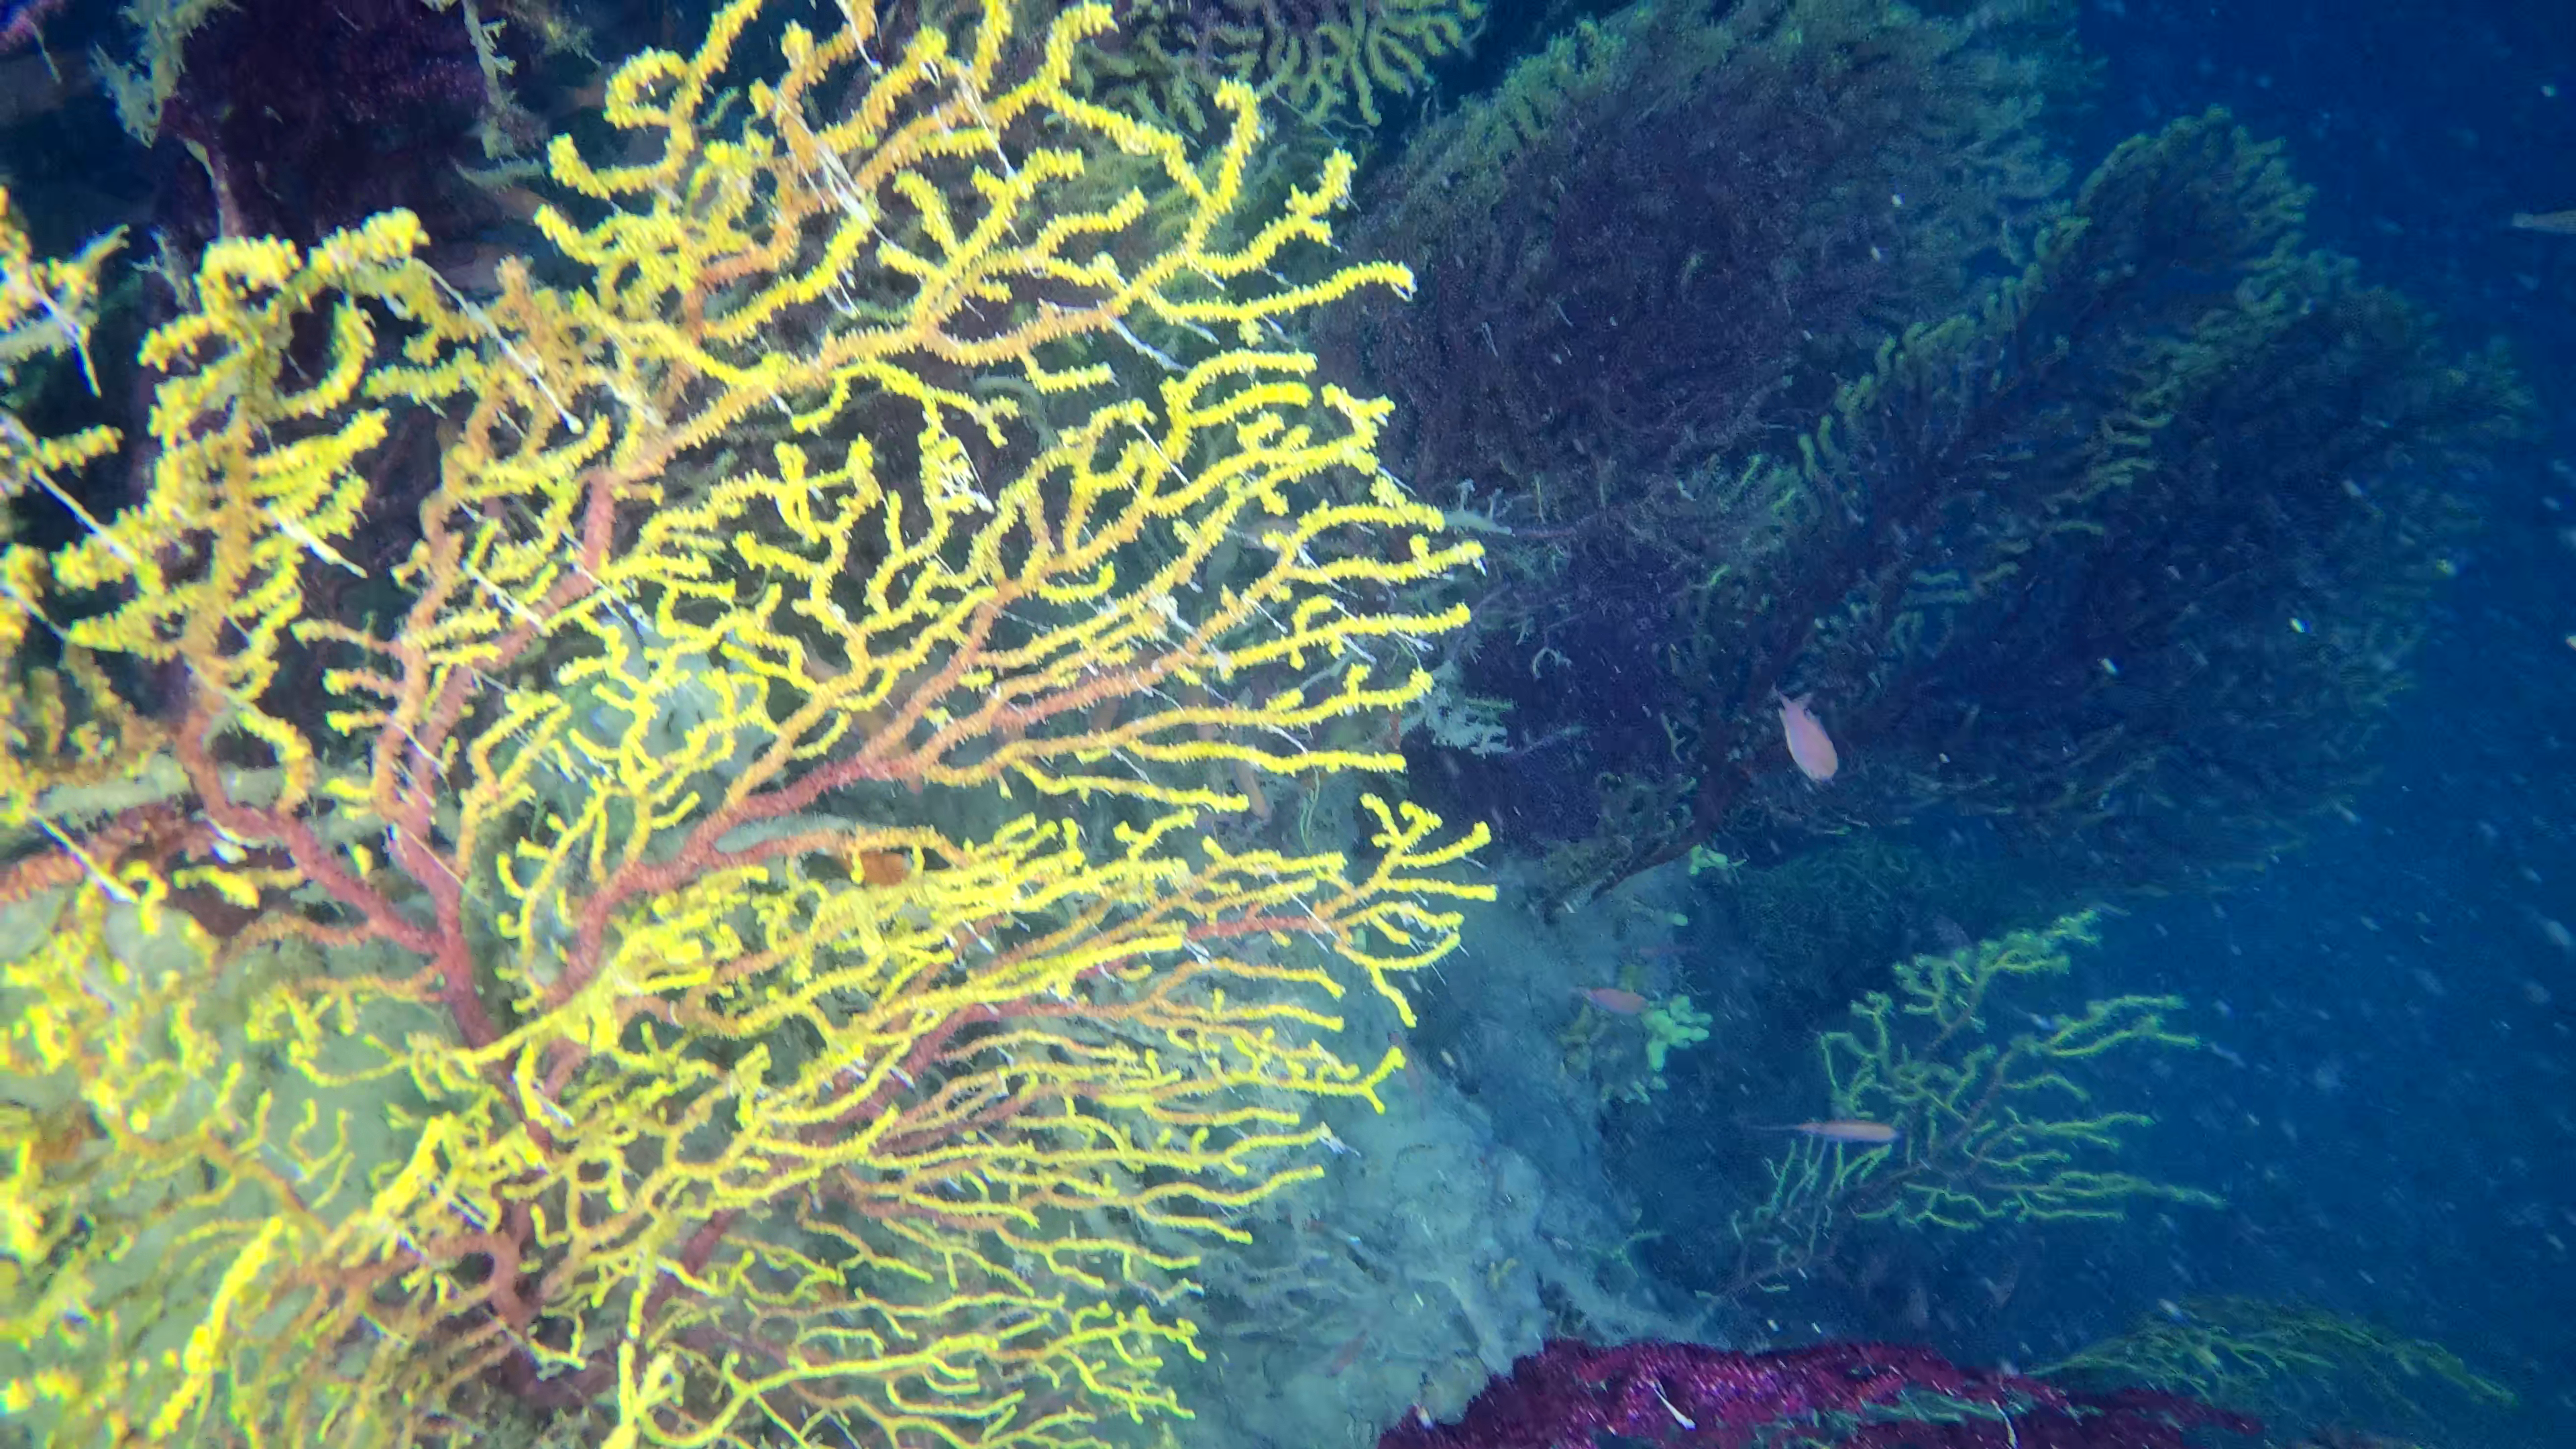 mediterranea Savalia savaglia and Paramuricea clavata gold coral and violescent sea-whip www.intotheblue.it